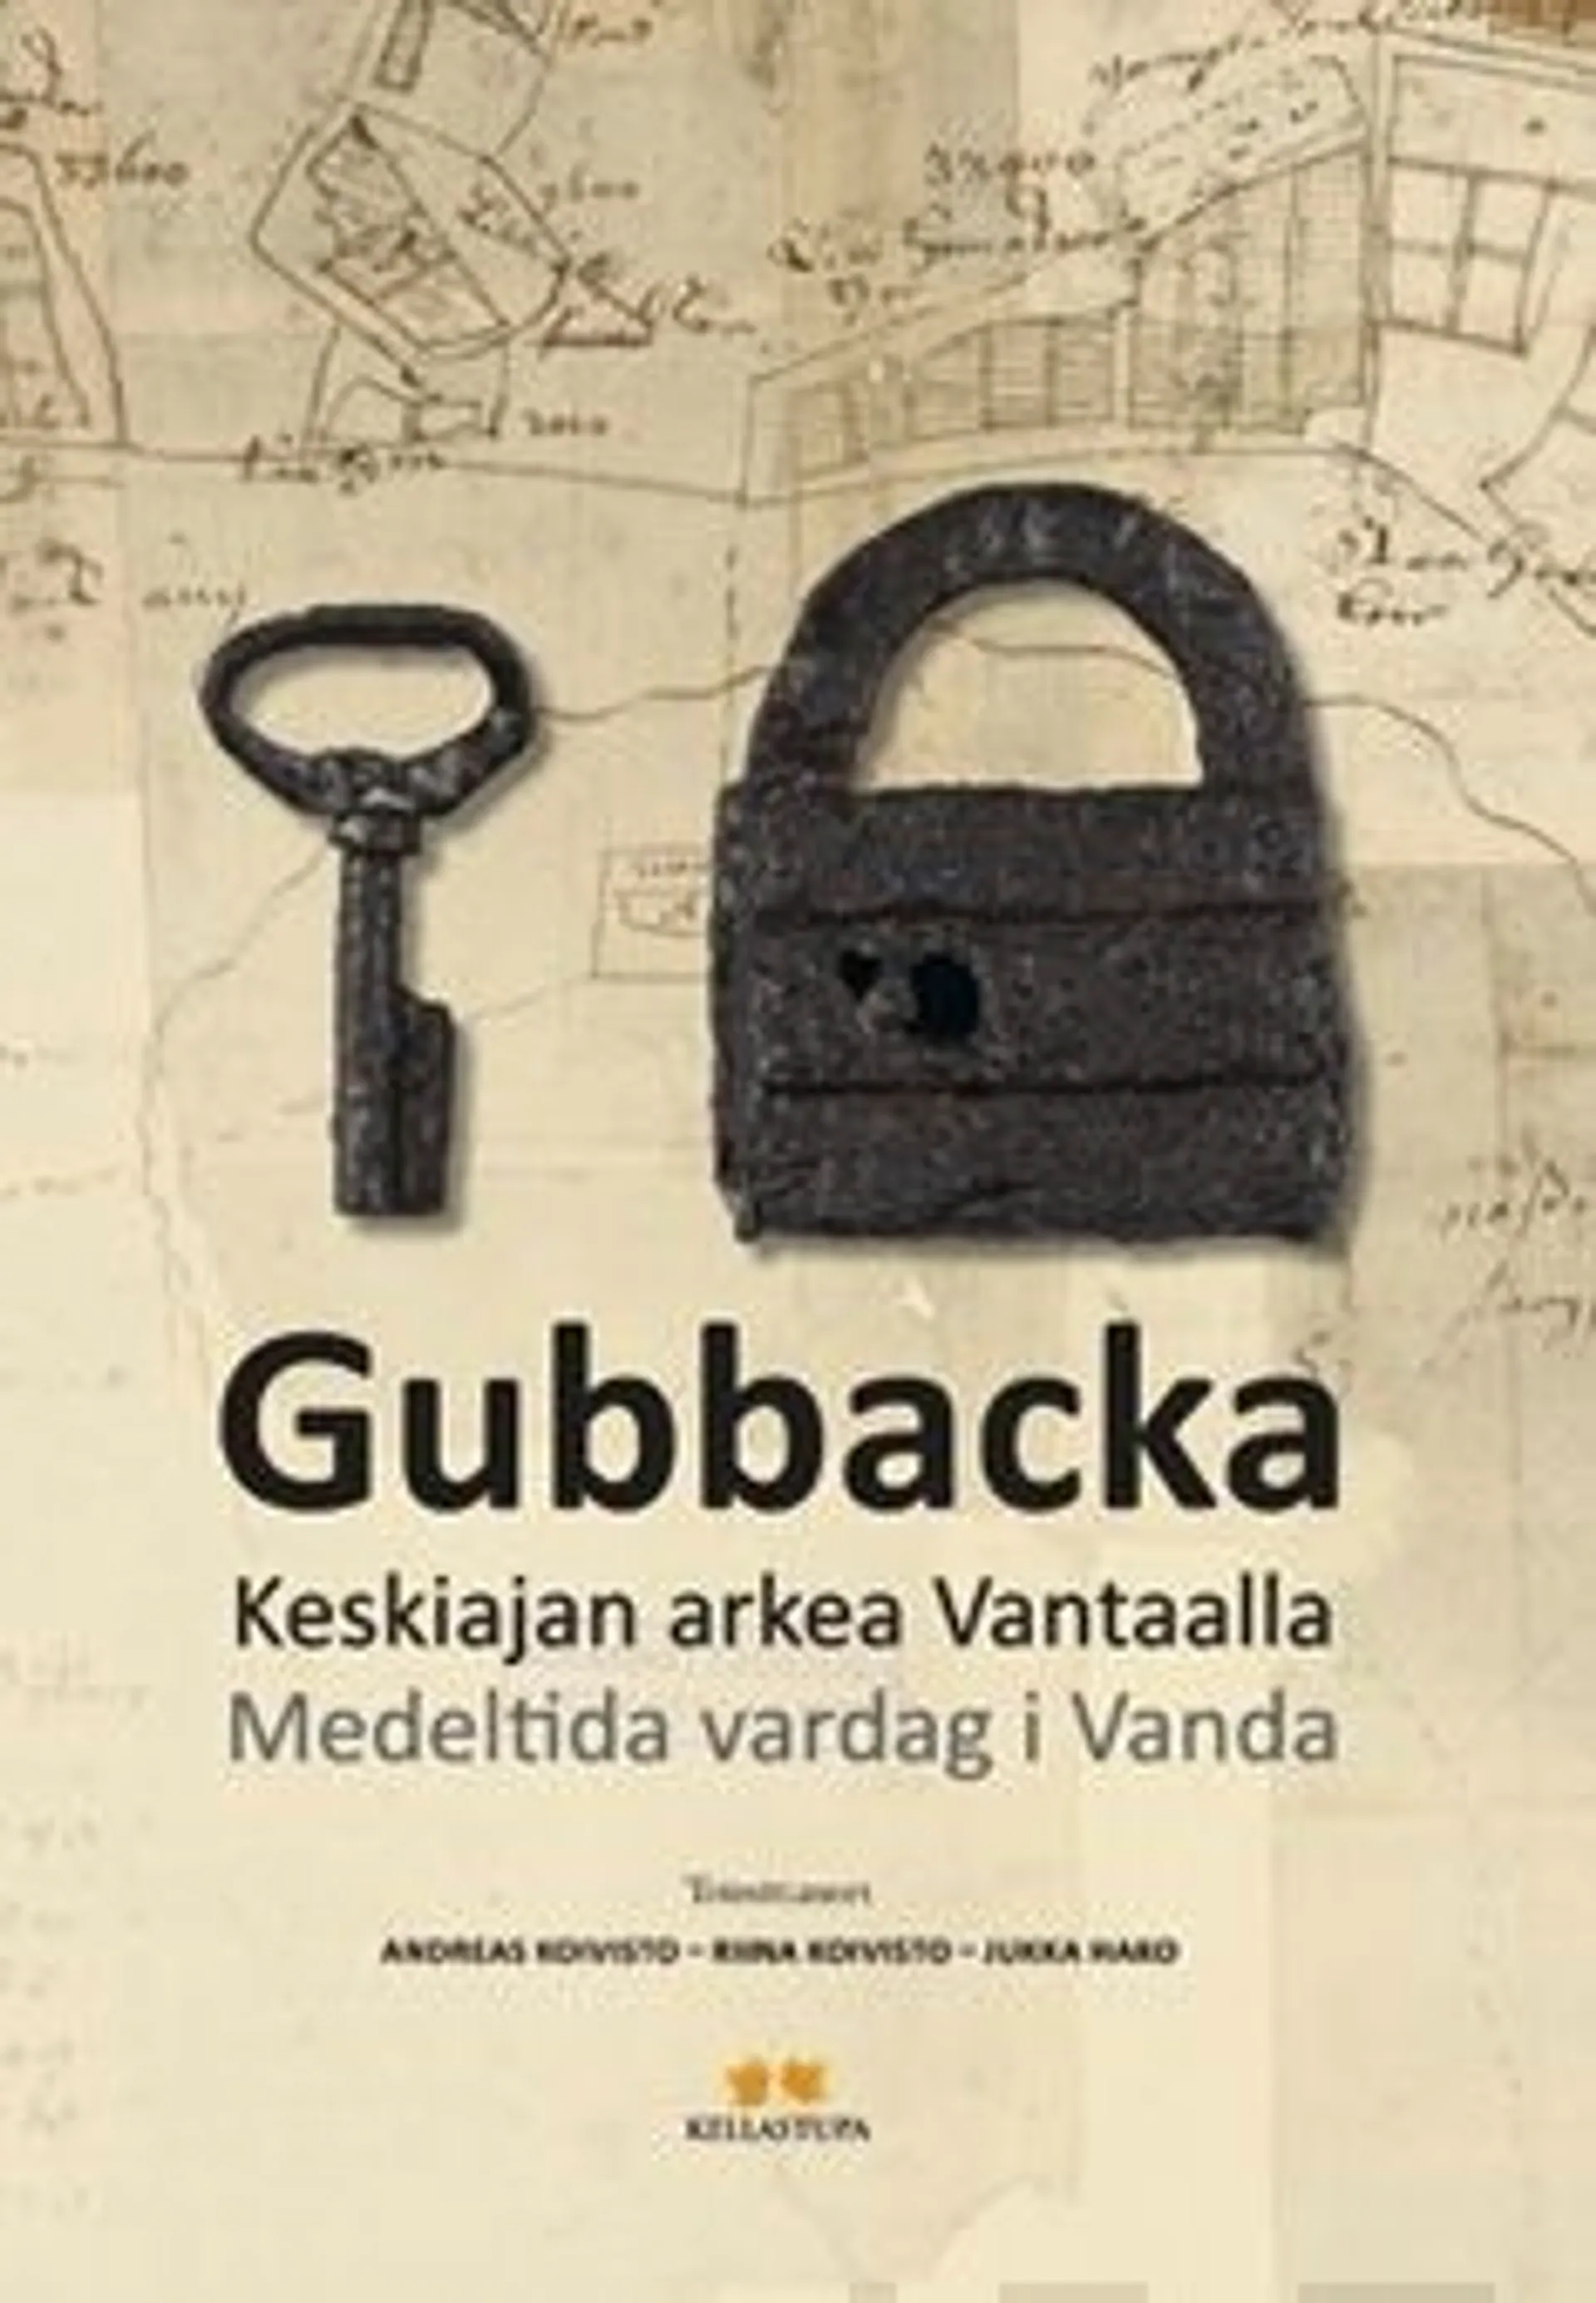 Gubbacka - Keskiajan arkea Vantaalla